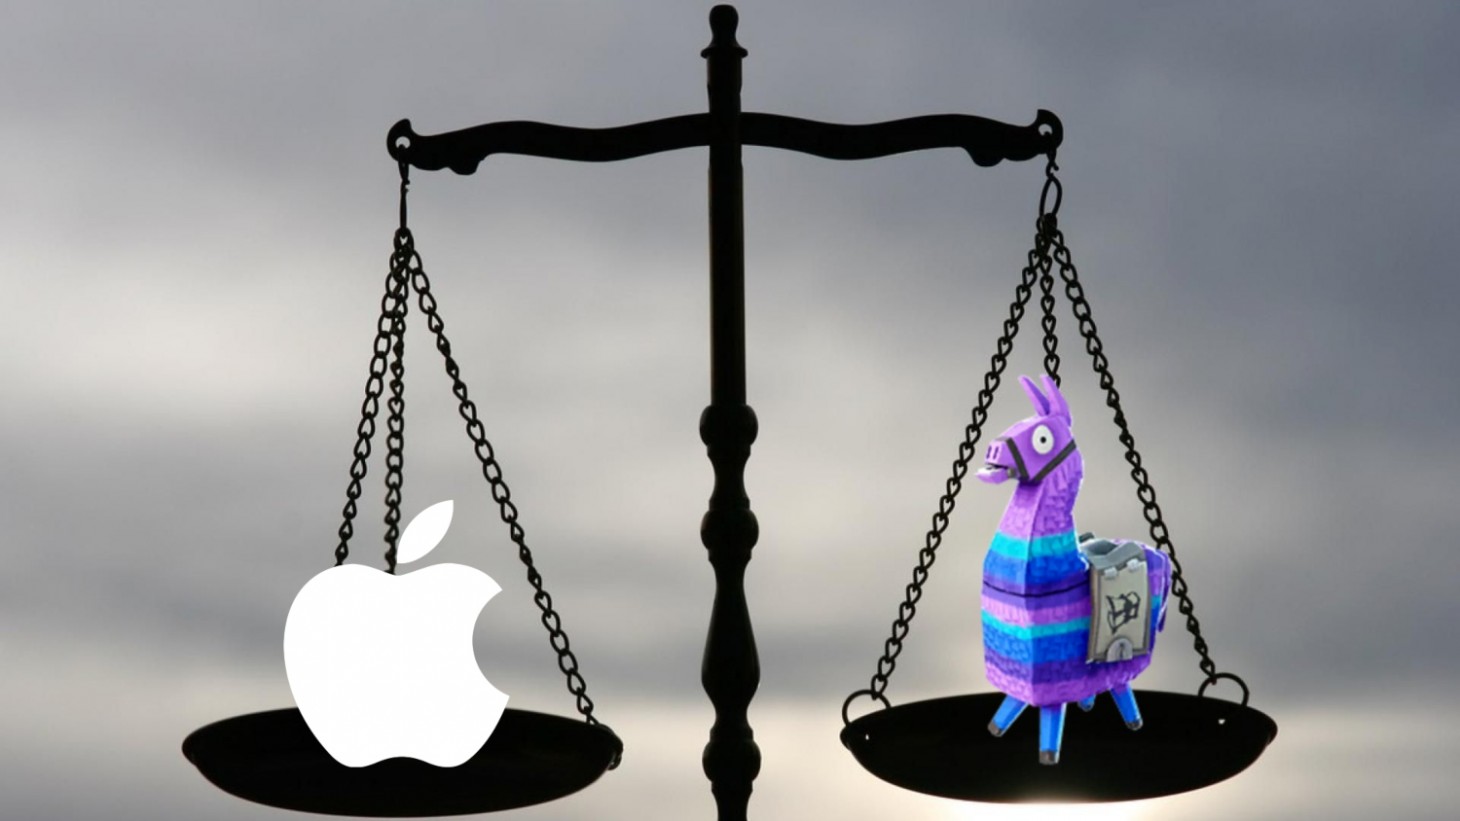 Epic vs Apple: All the headlines